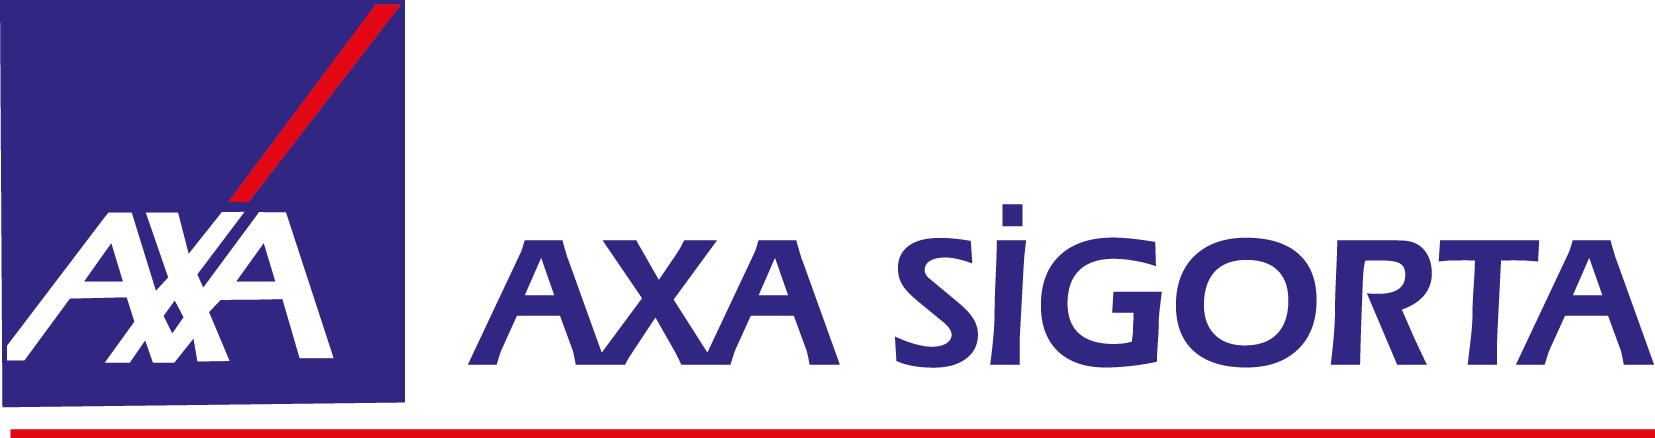 Axa Sigorta Logo png